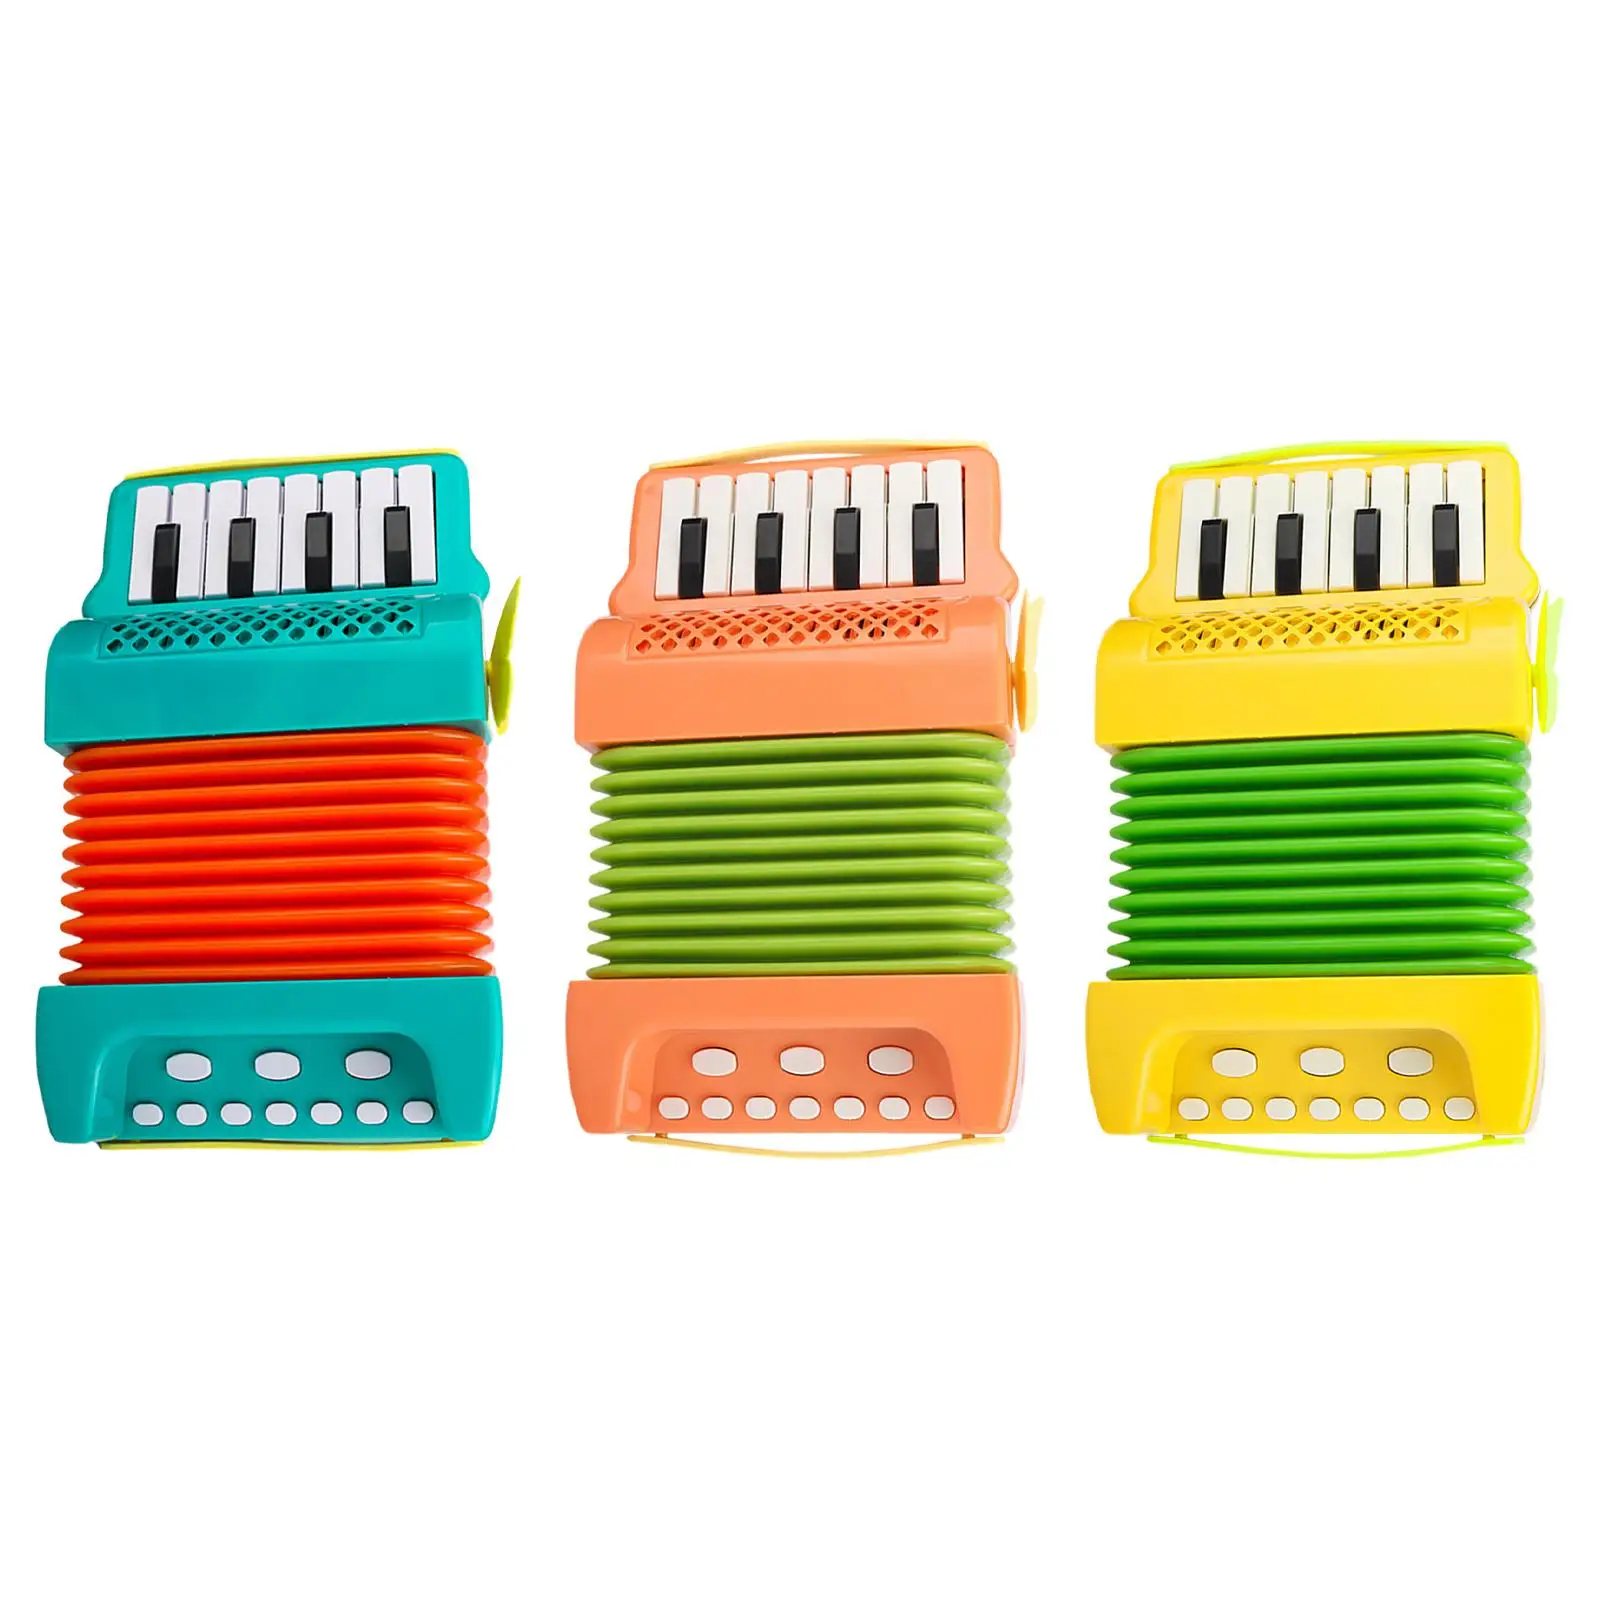 10 Keys 8 Bass Piano Accordion Kids Accordion Toy for Boys Girls Beginner